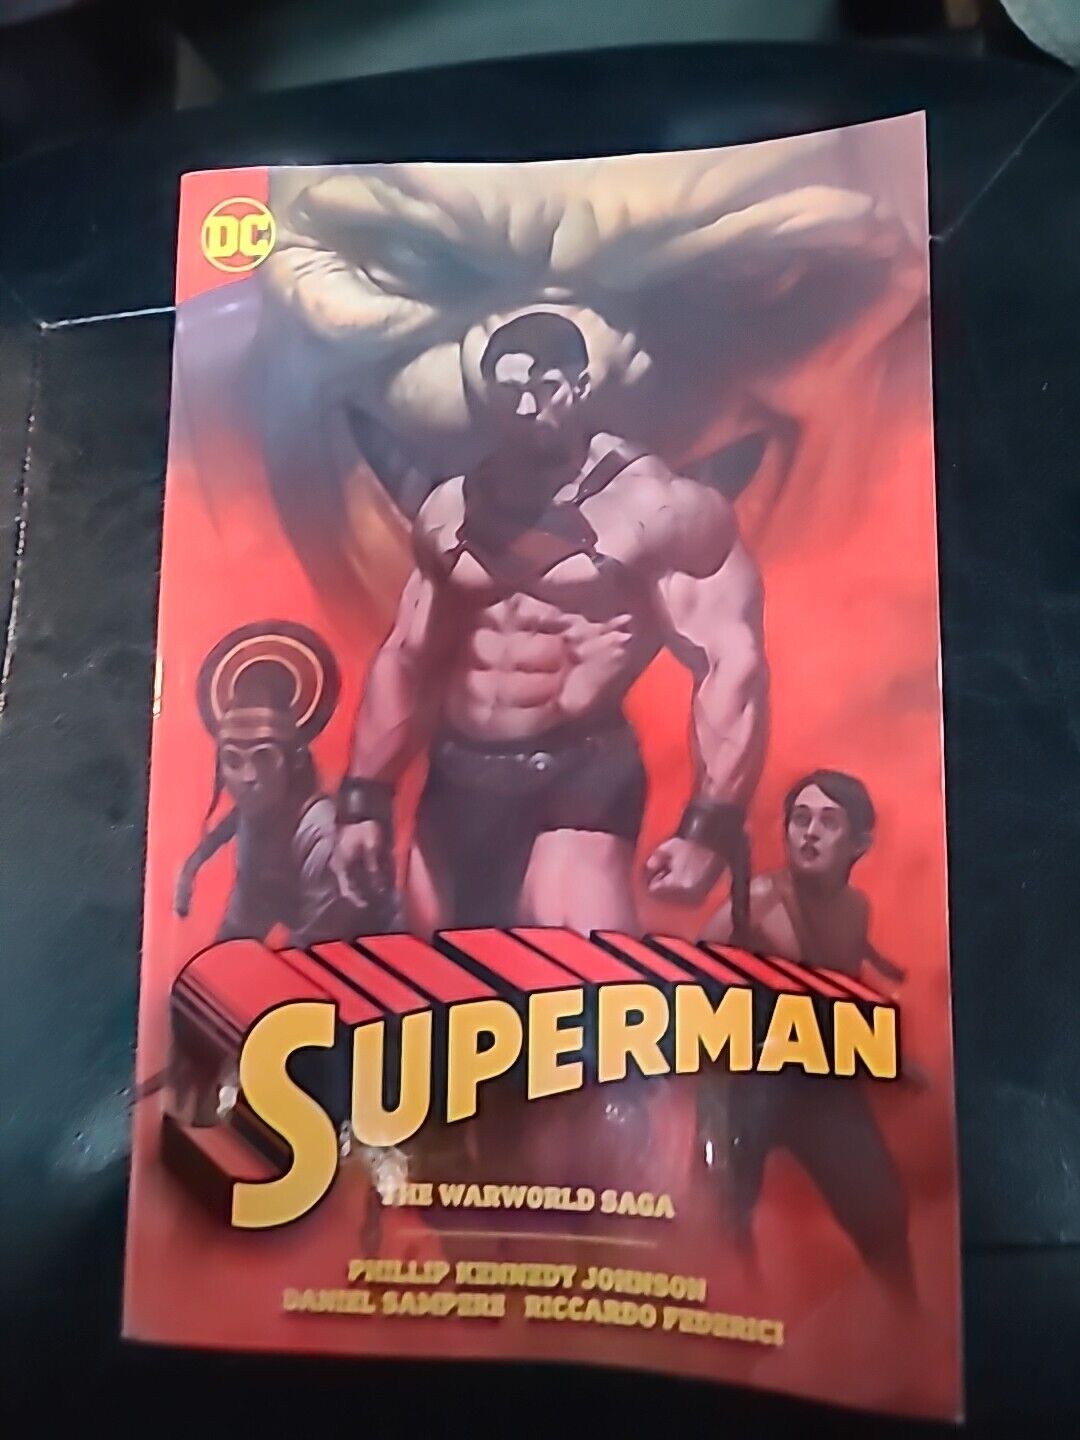 SUPERMAN THE WARWORLD SAGA GRAPHIC NOVEL (712 Pages) Paperback by DC Comics